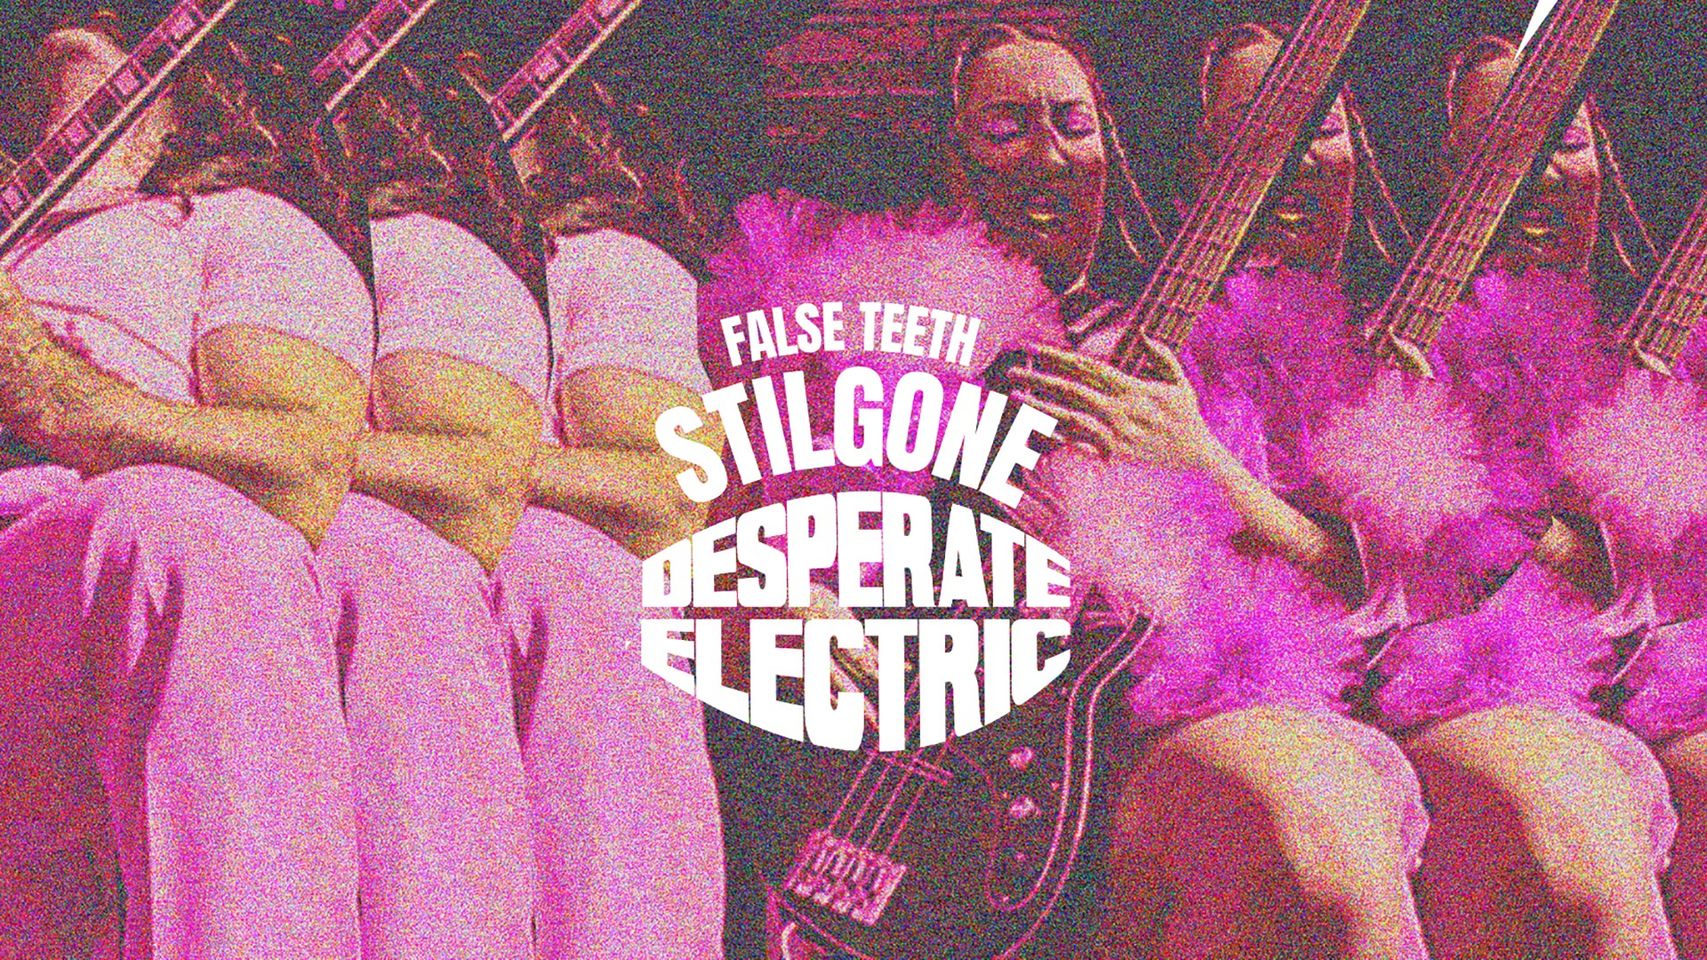 Desperate Electric + STiLGONE + False Teeth